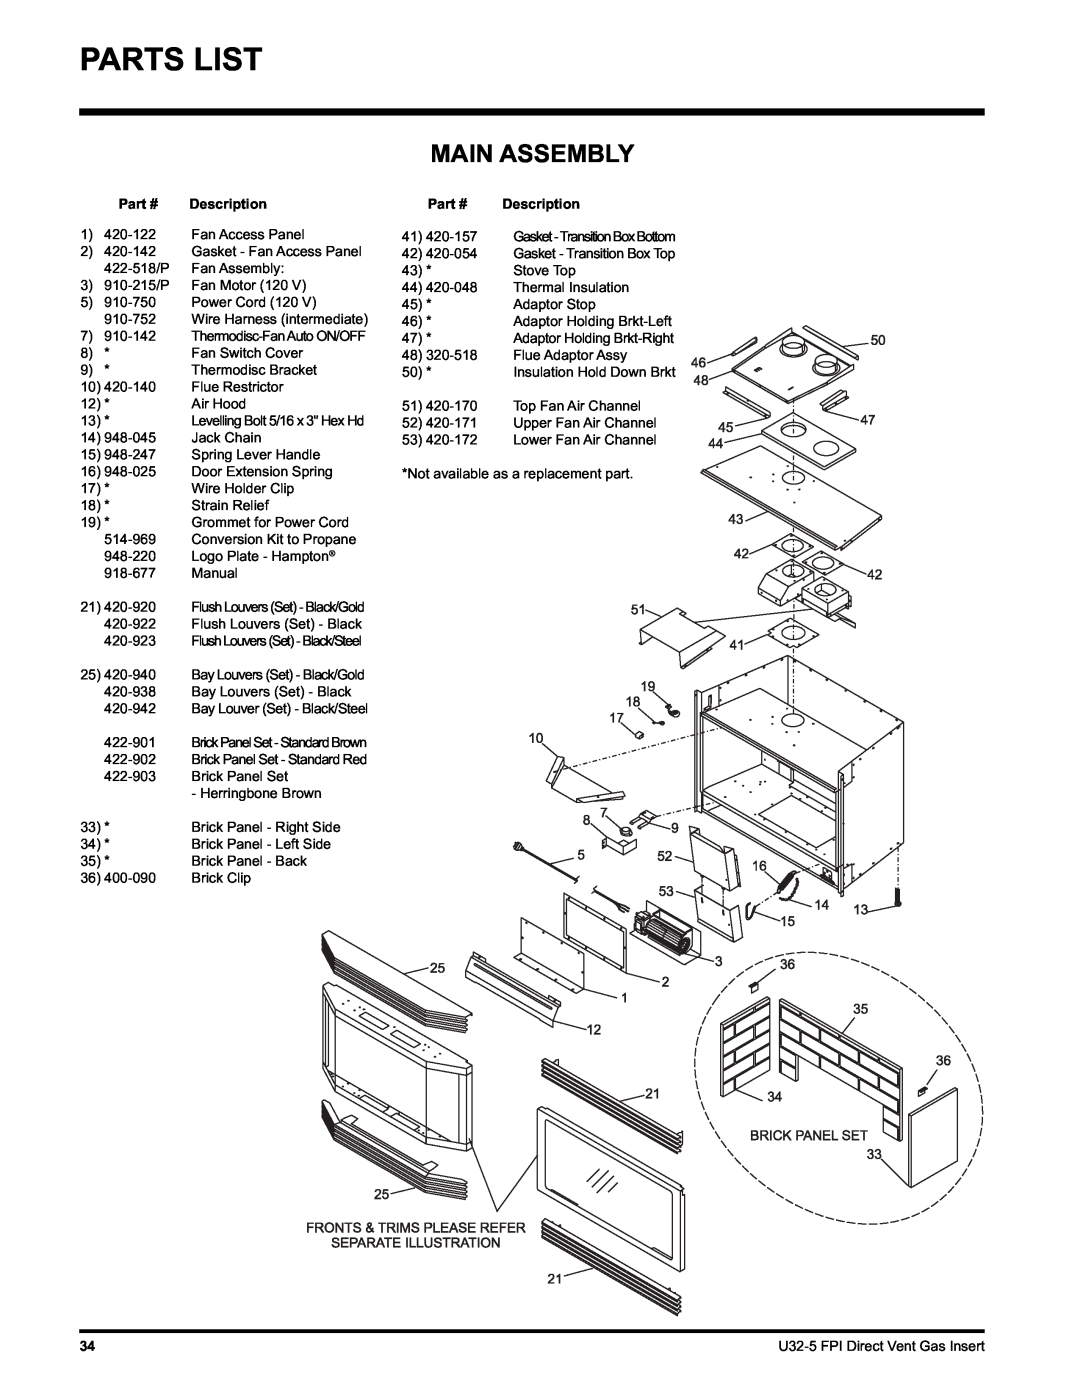 Hampton Direct U32 installation manual Parts List, Main Assembly, Description 